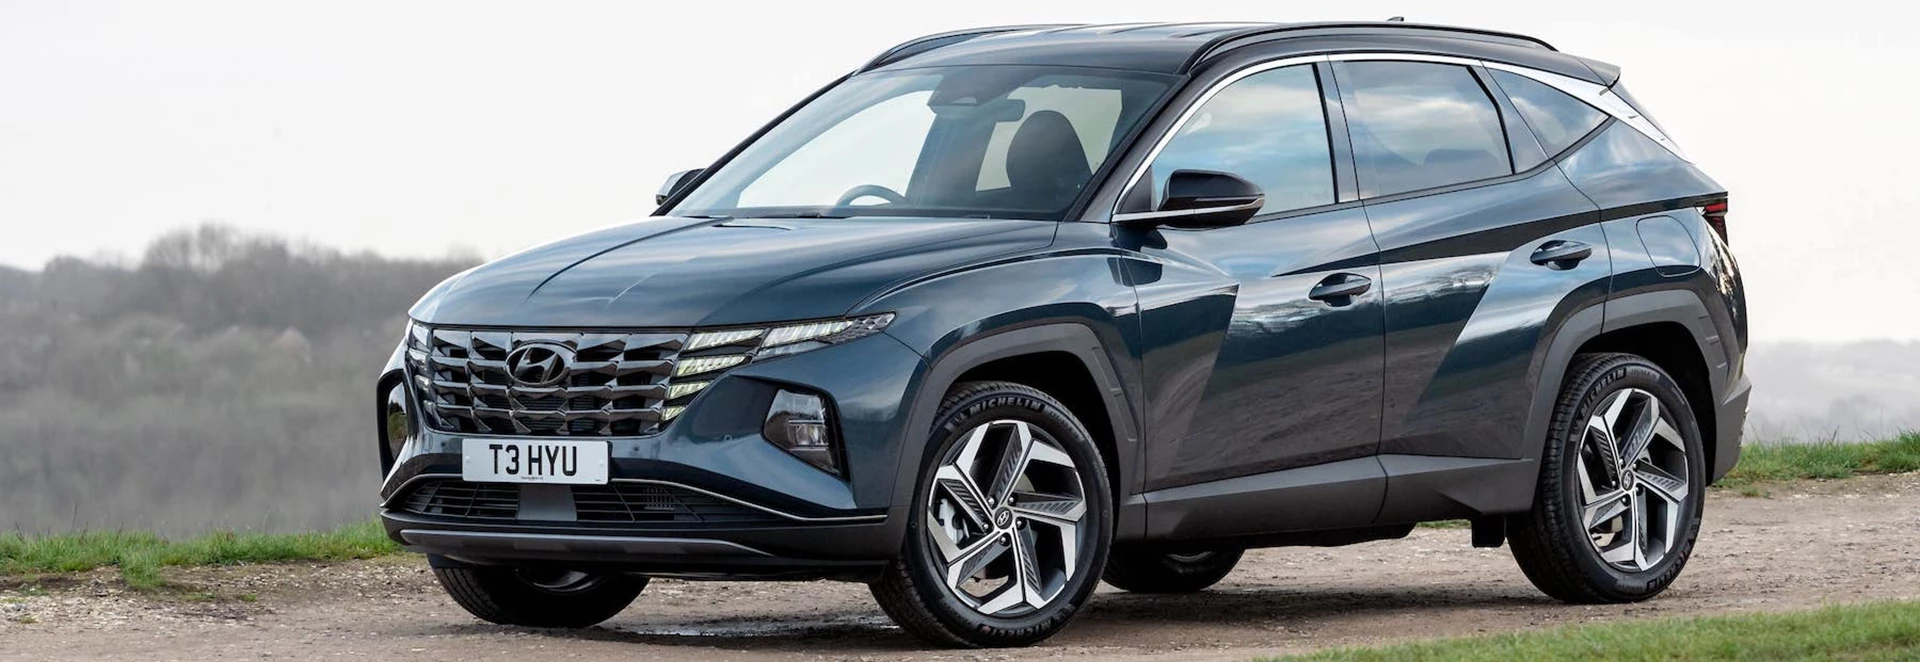 Hyundai Tucson 2021 Review 